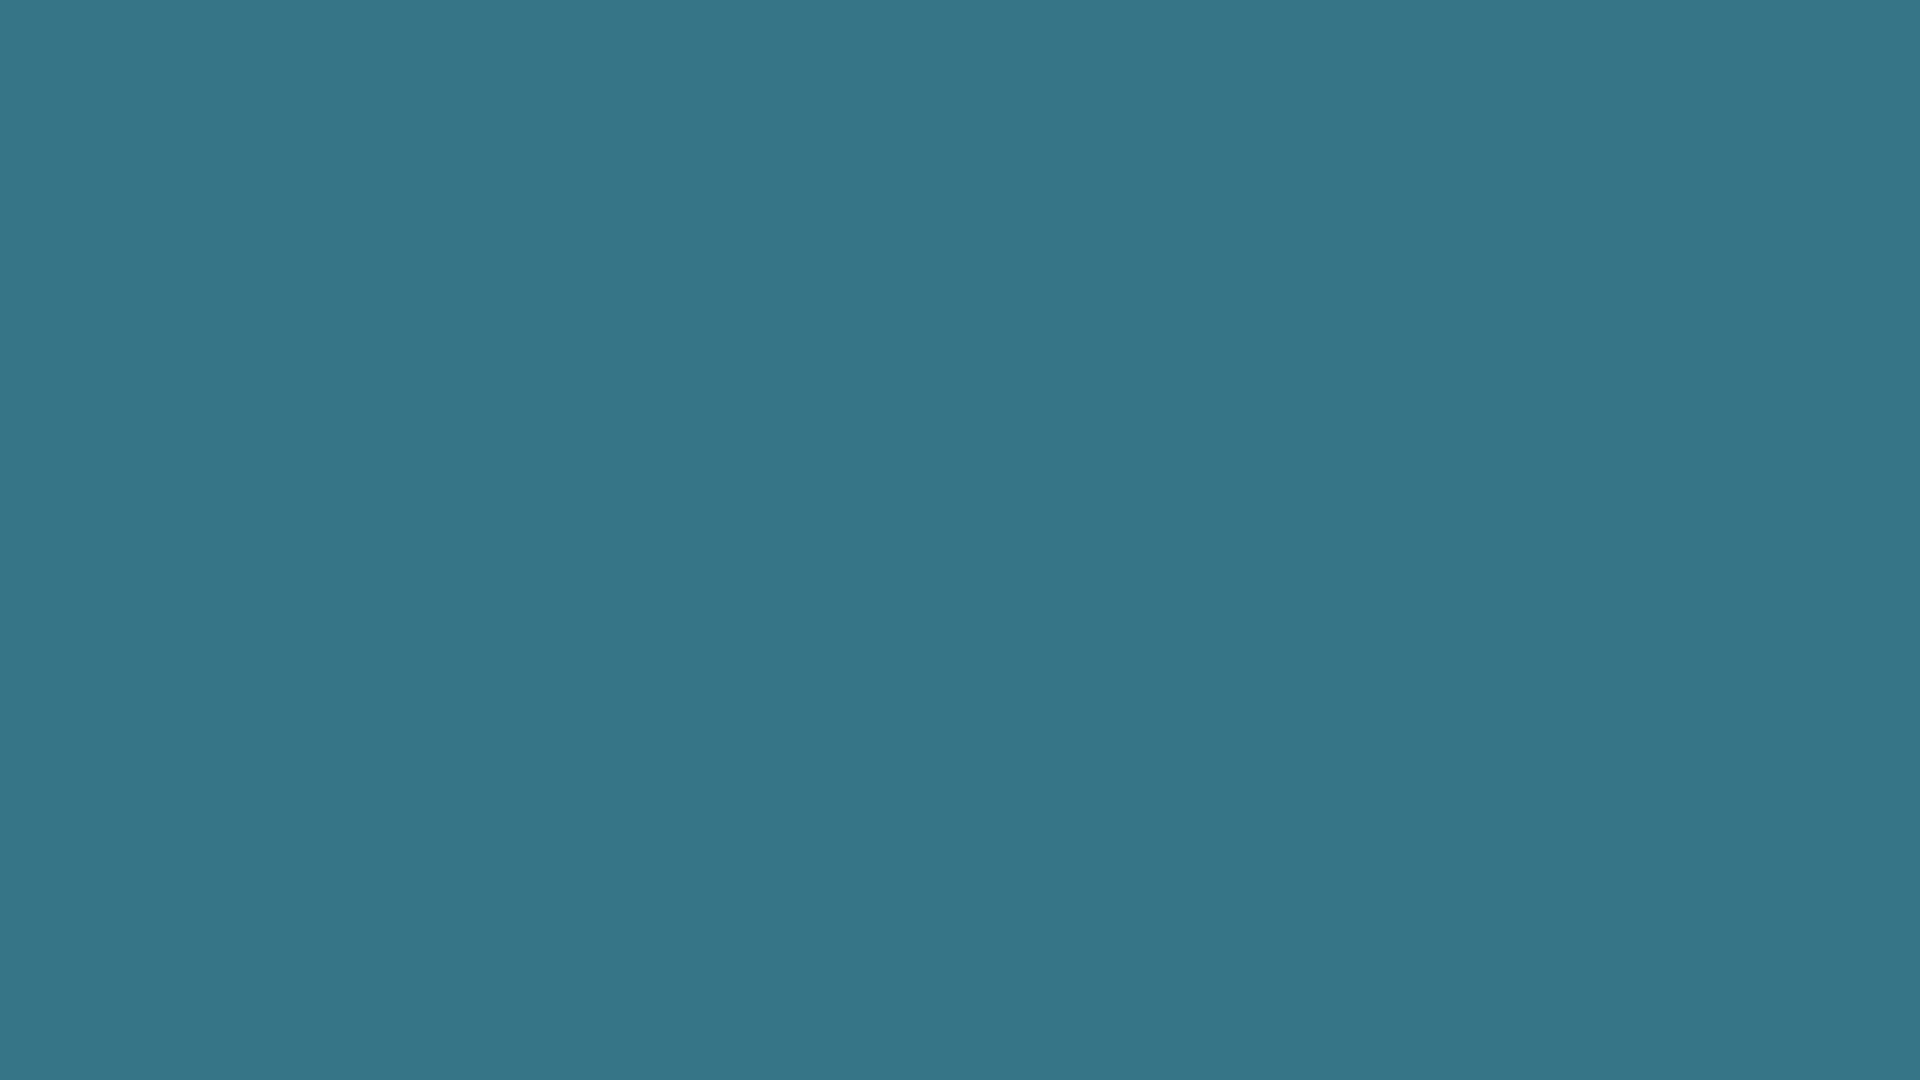 1920x1080 Teal Blue Solid Color Background